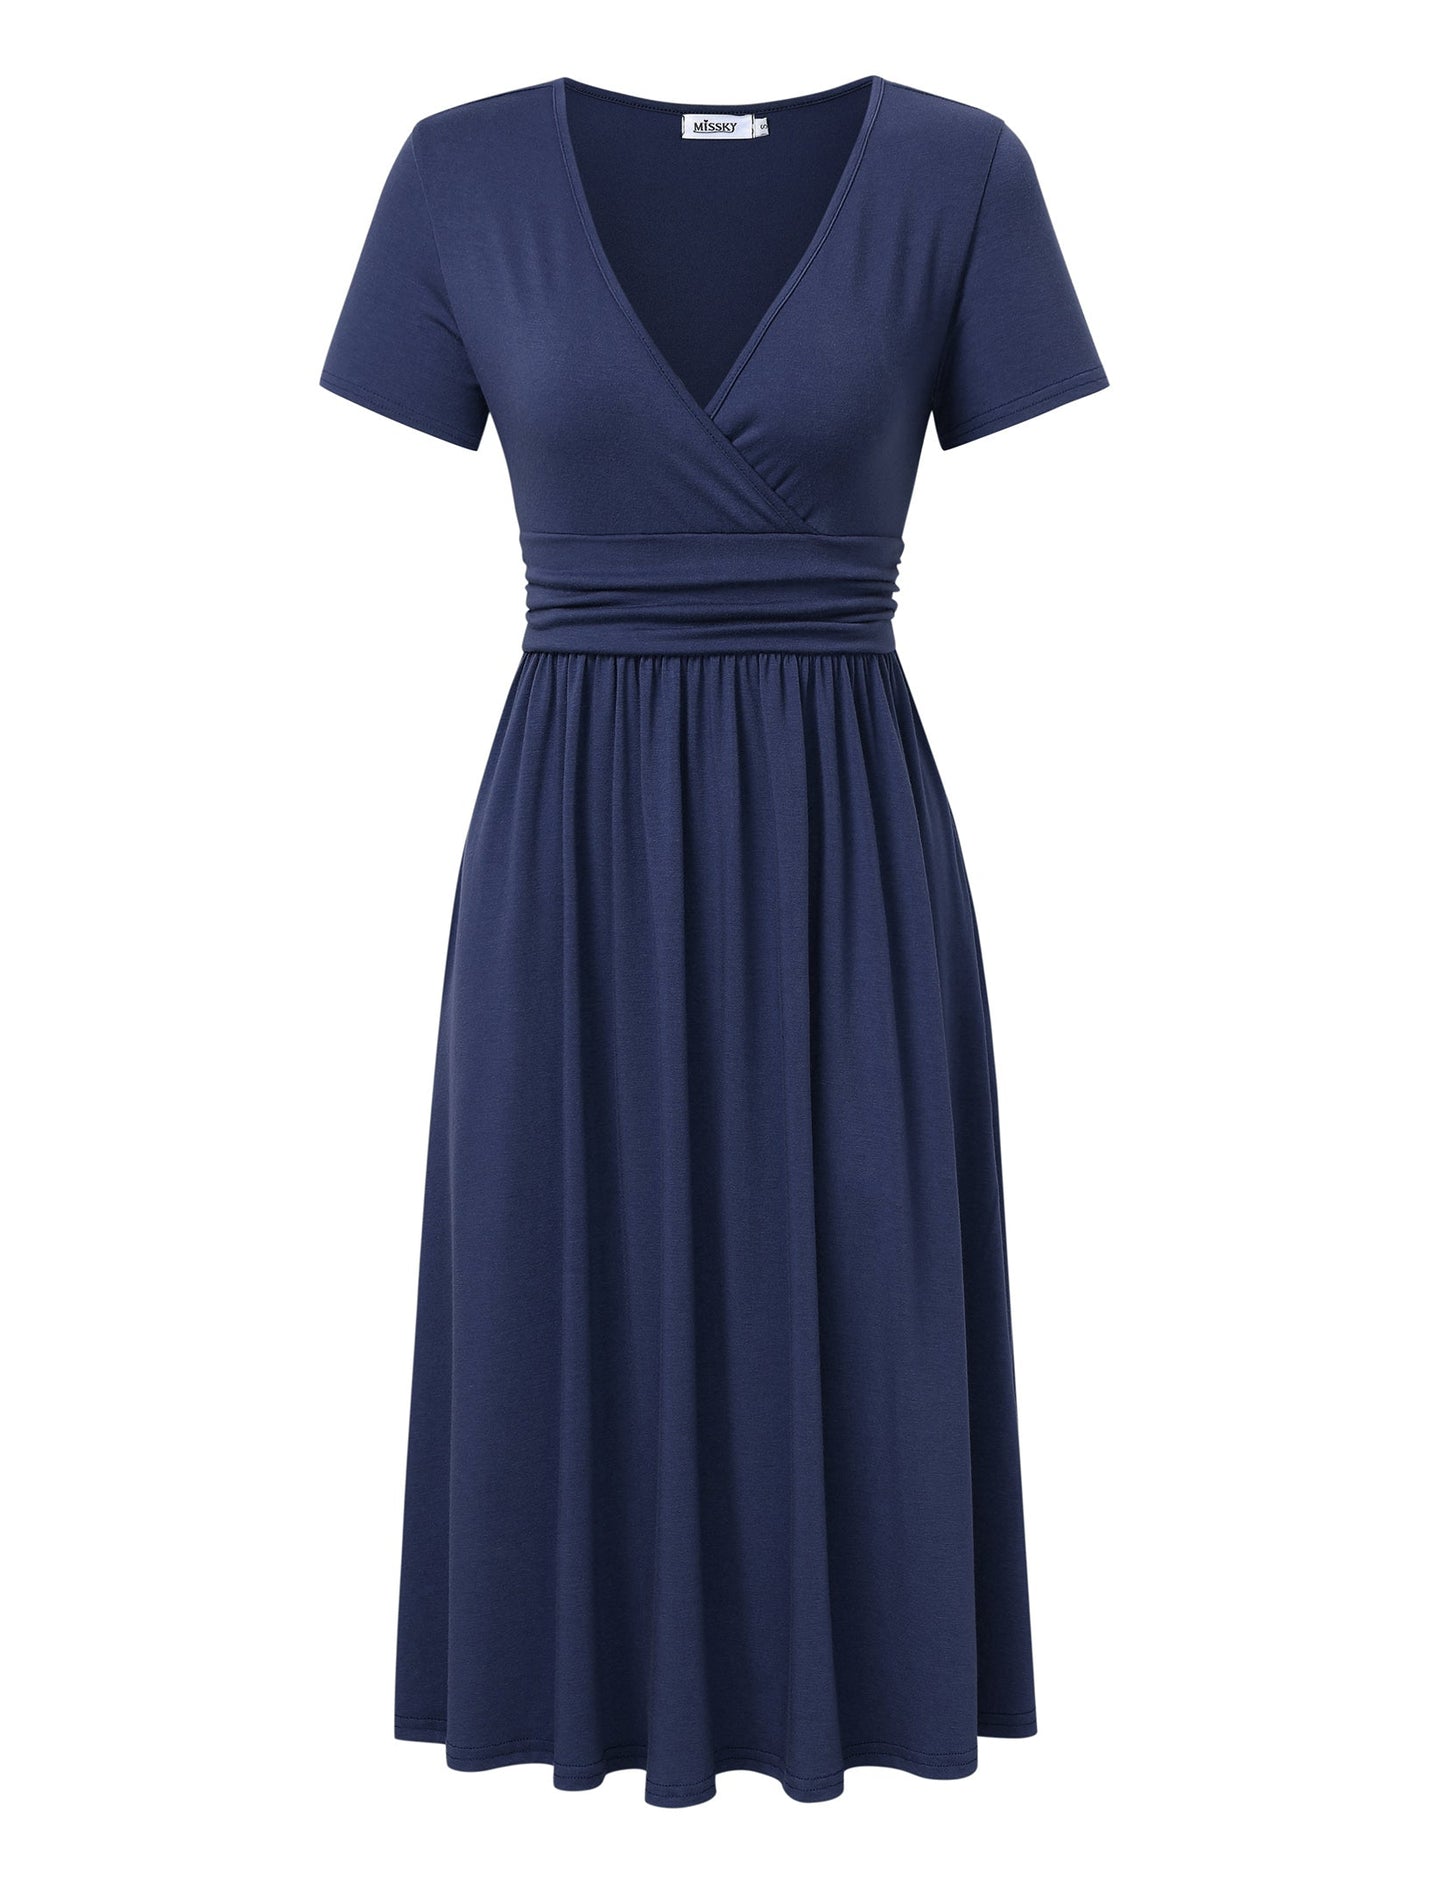 YESFASHION Women's V-neck Casual Dress Navy Blue